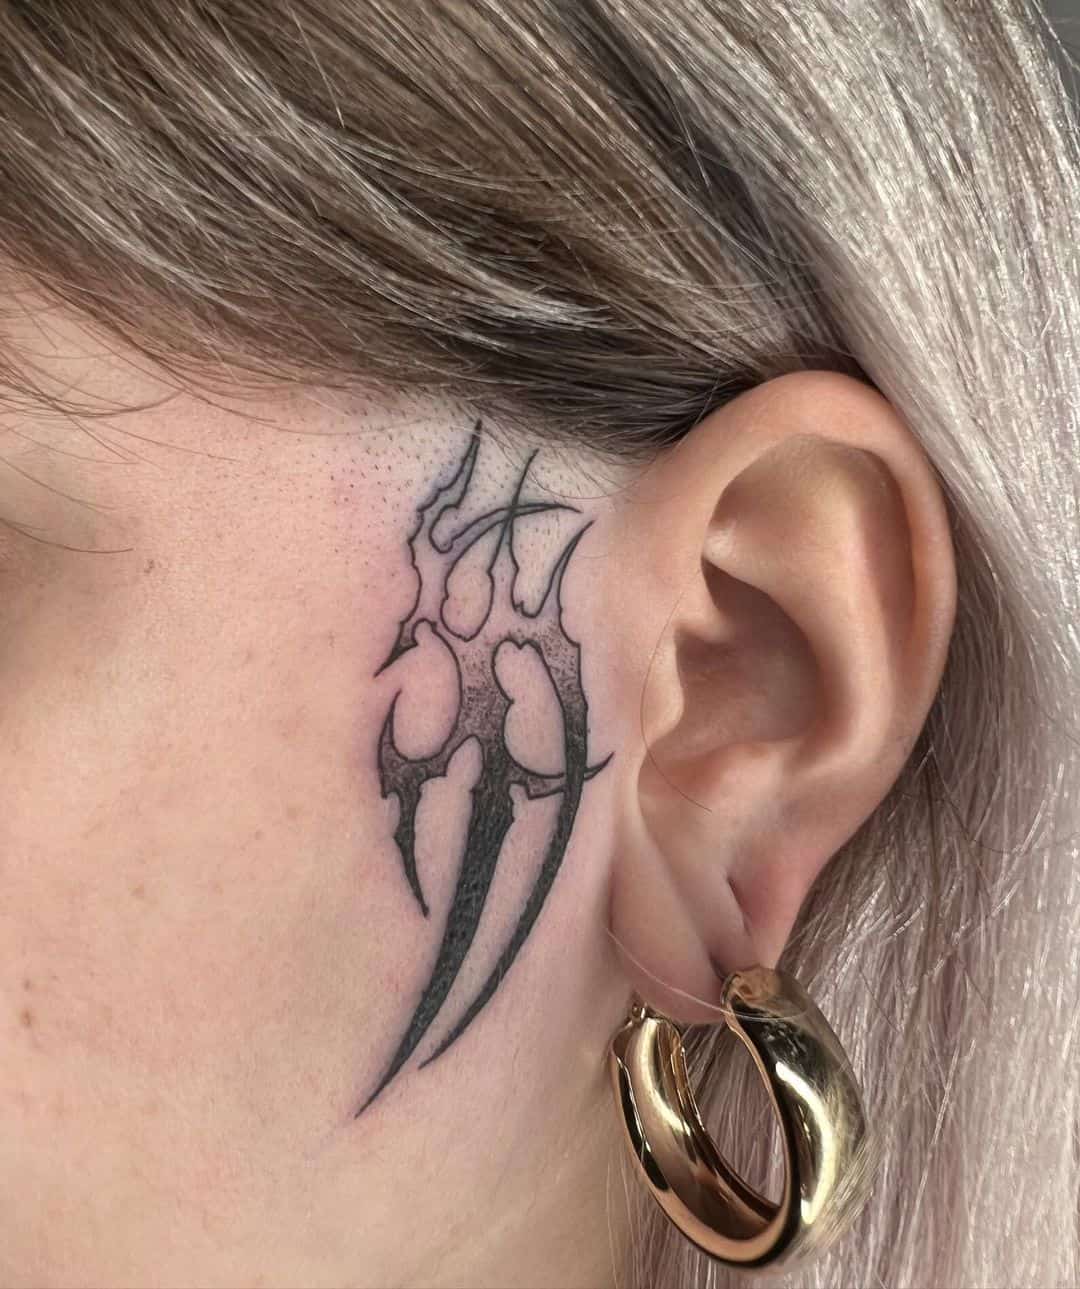 Ear Tattoo - Behind the ear tattoos